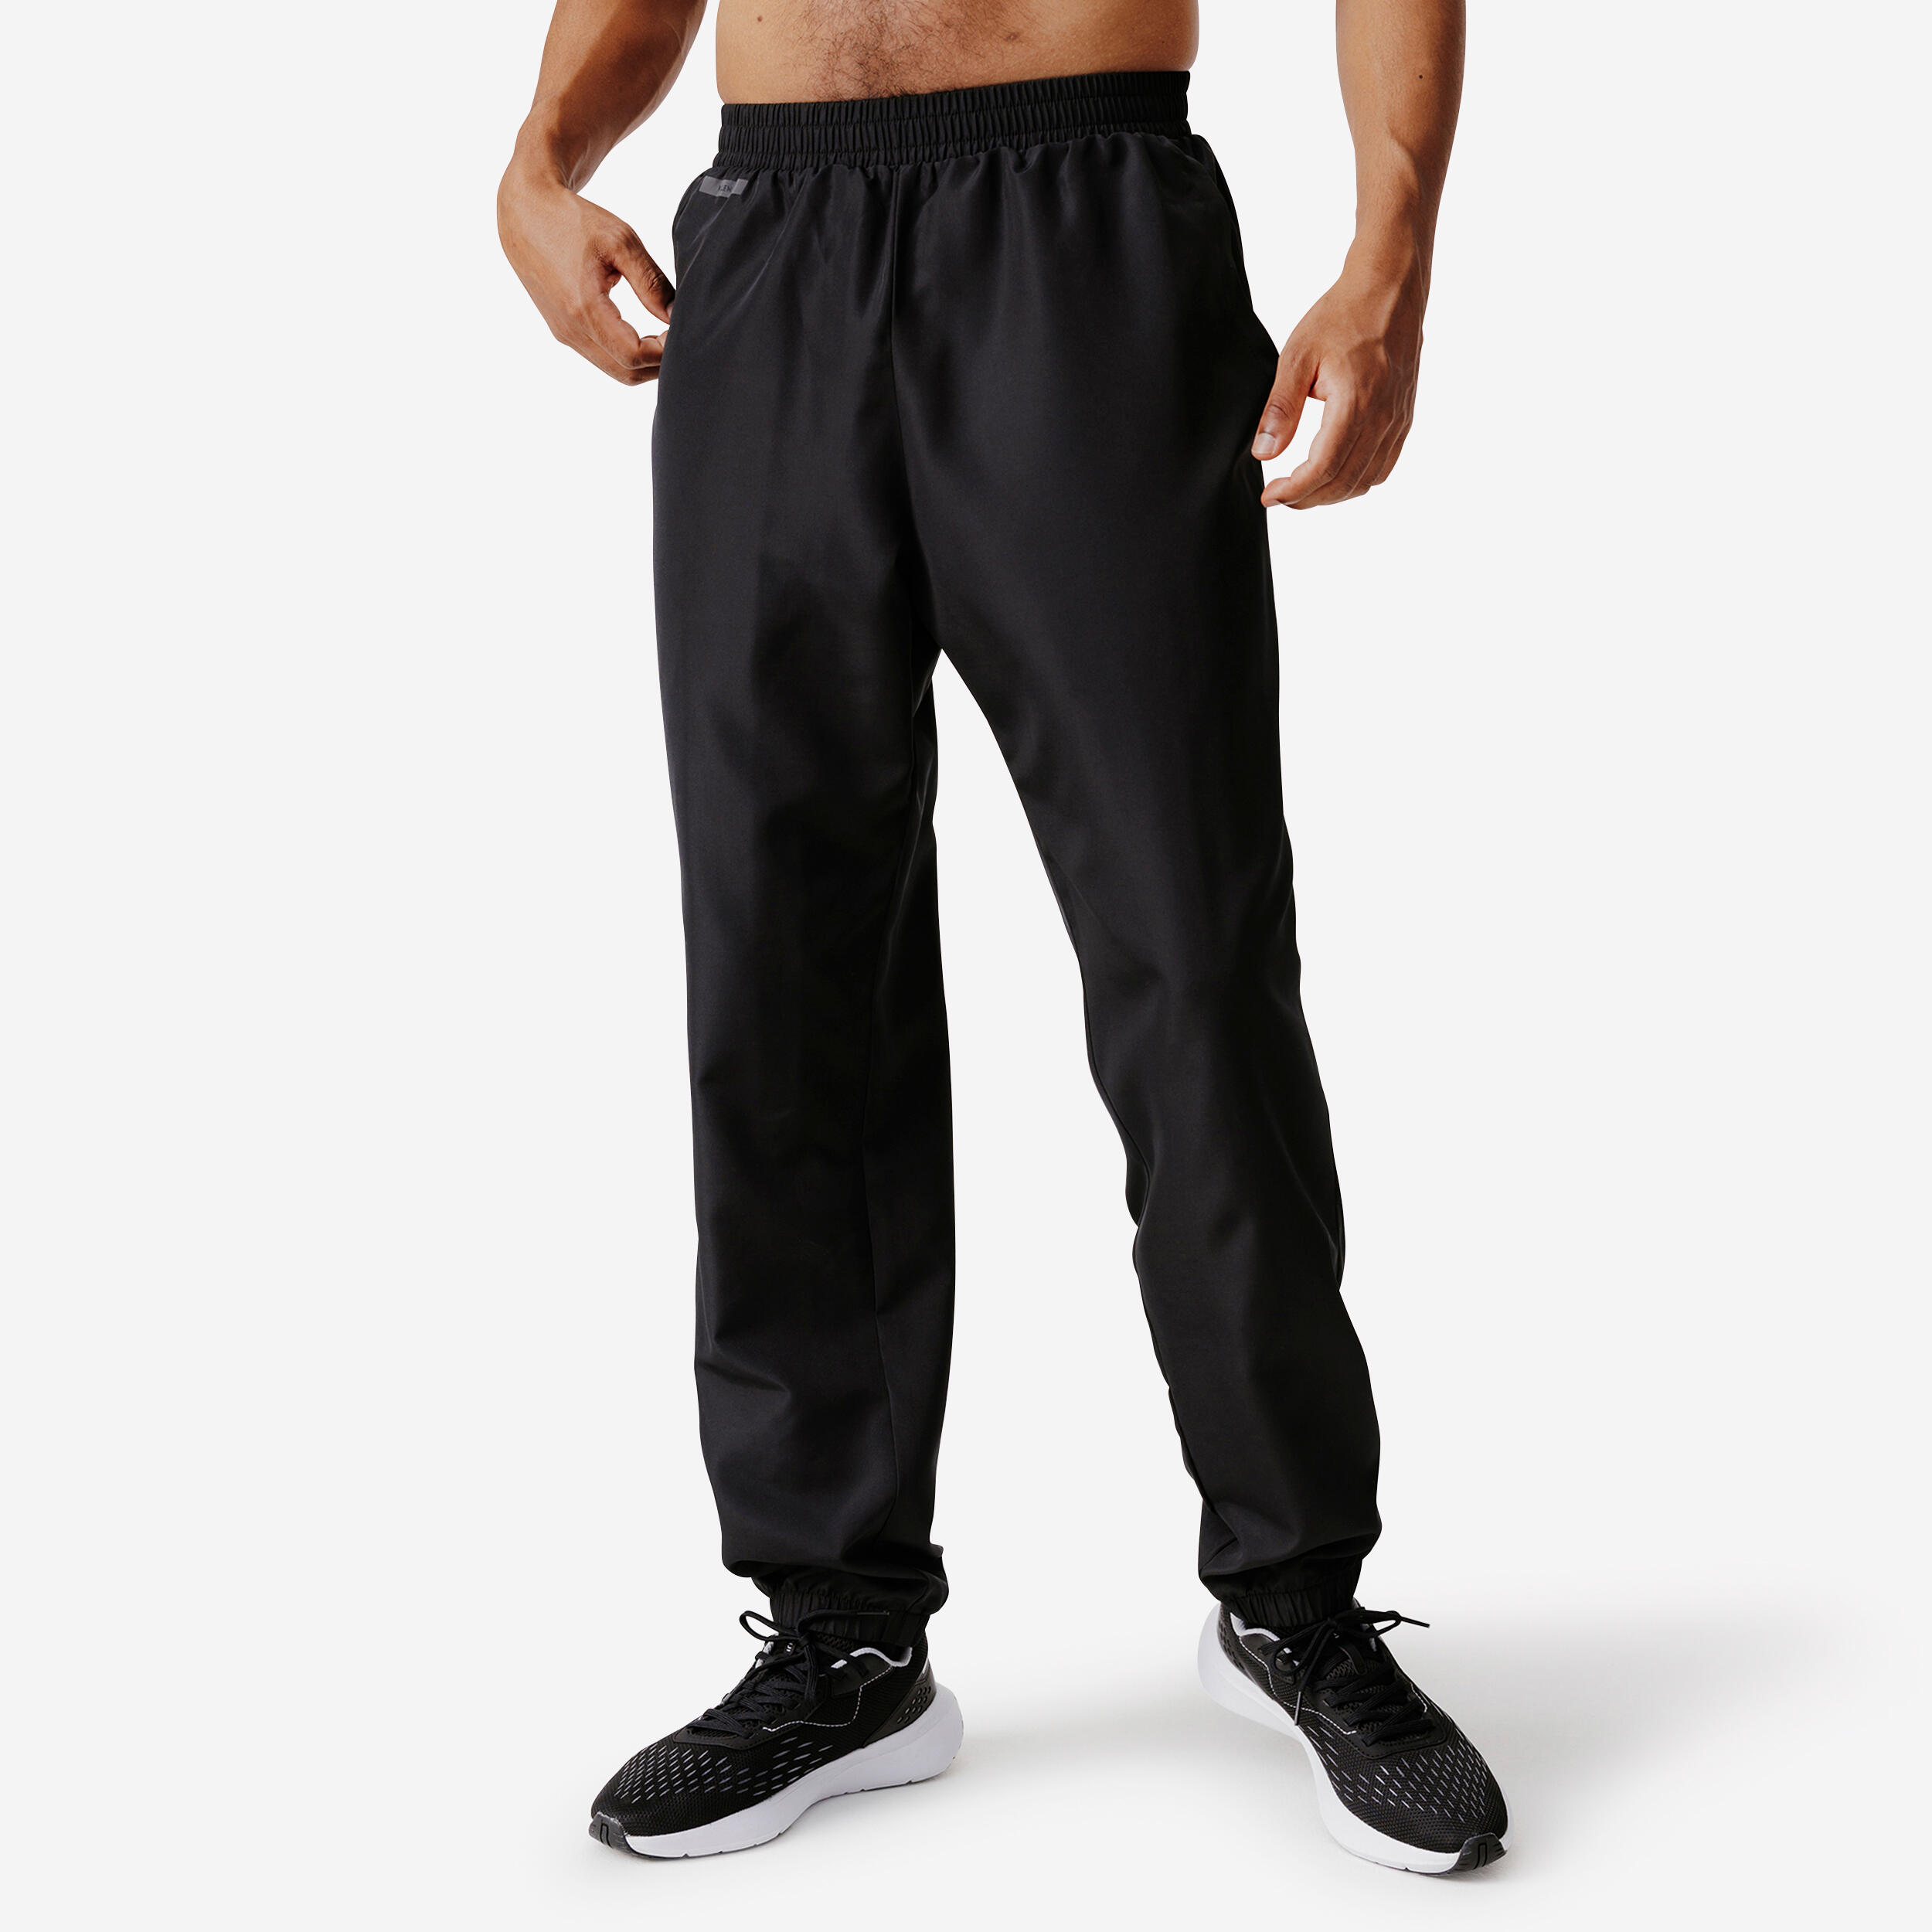 Men's Breathable Running Pants - Dry 100 Black